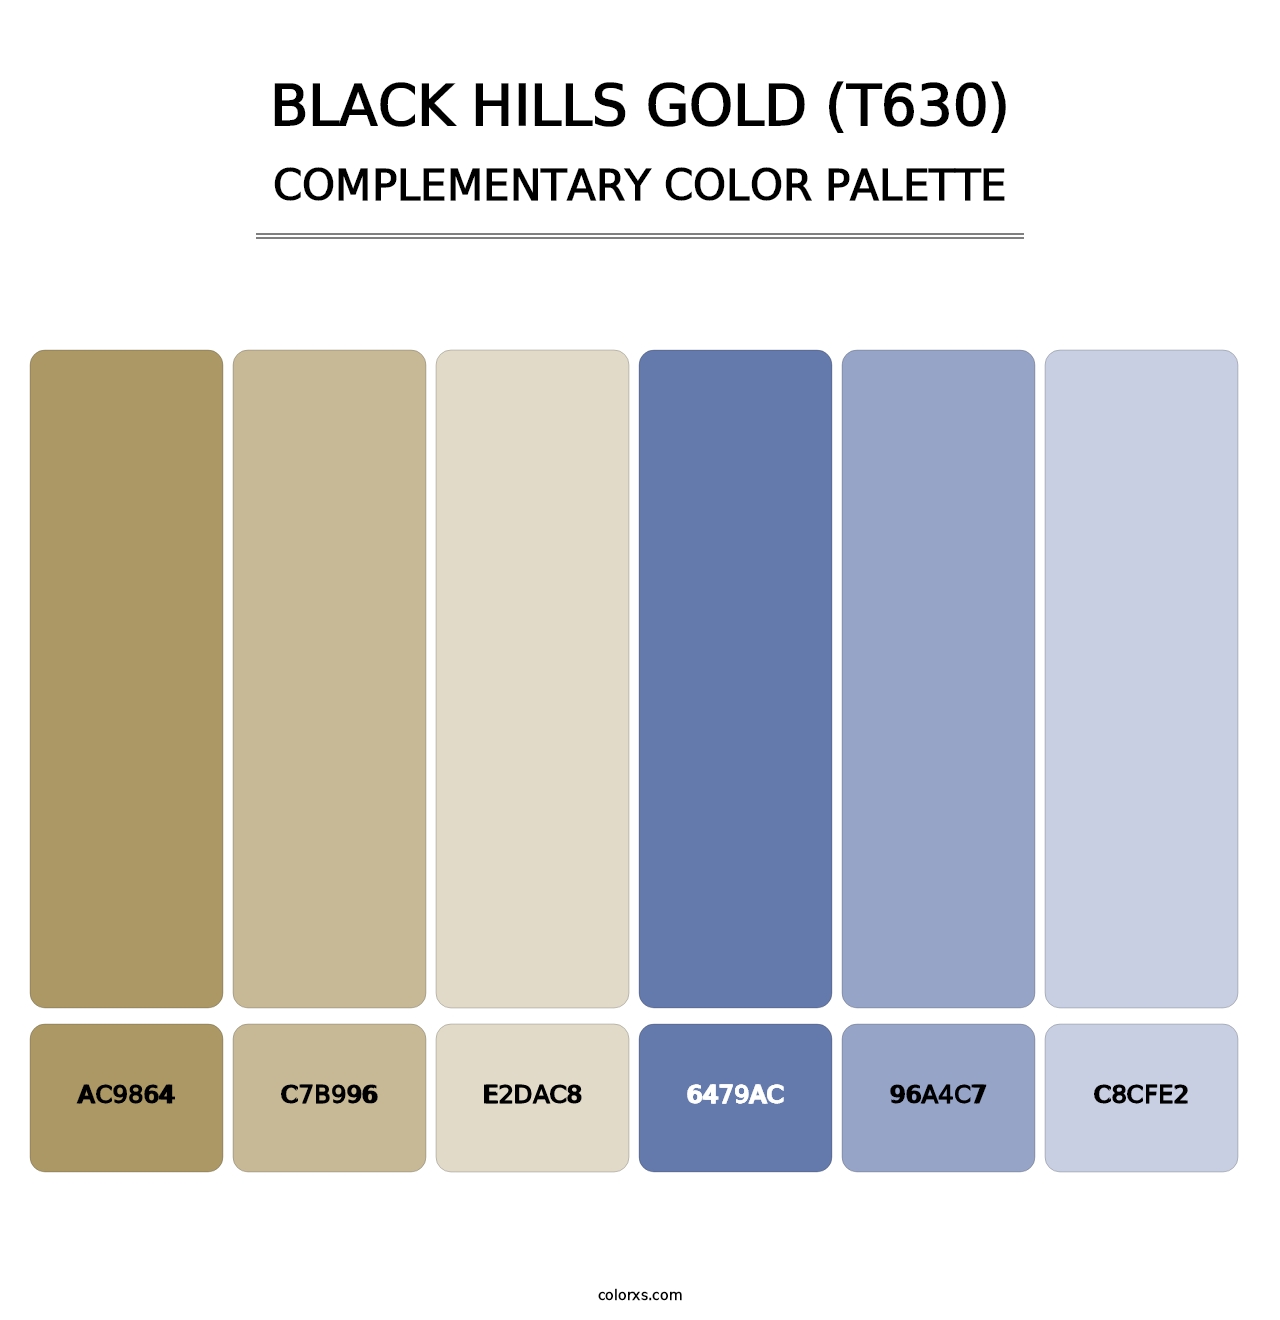 Black Hills Gold (T630) - Complementary Color Palette